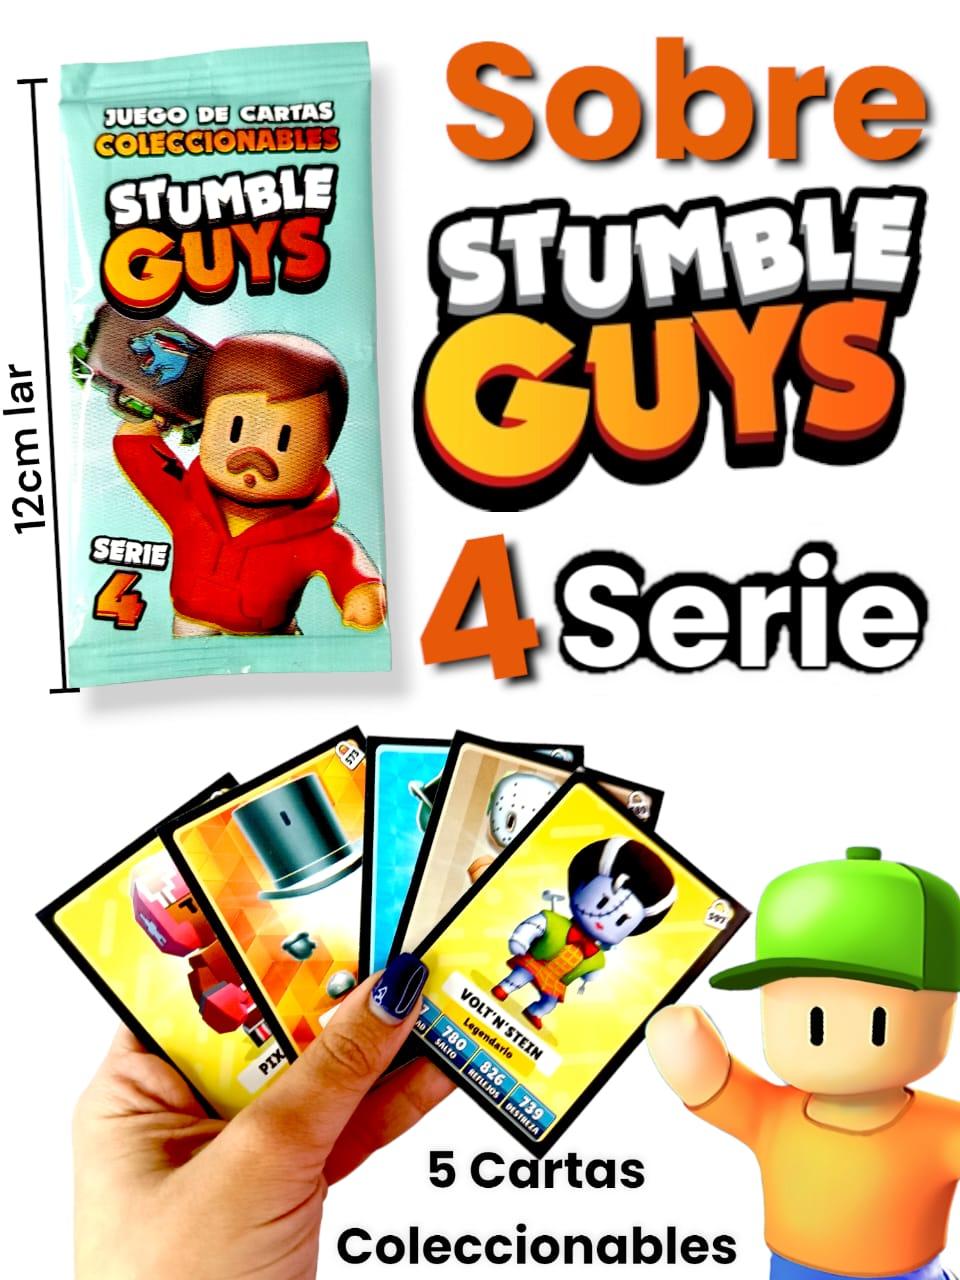 Sobre STUMBLE GUYS Serie 4